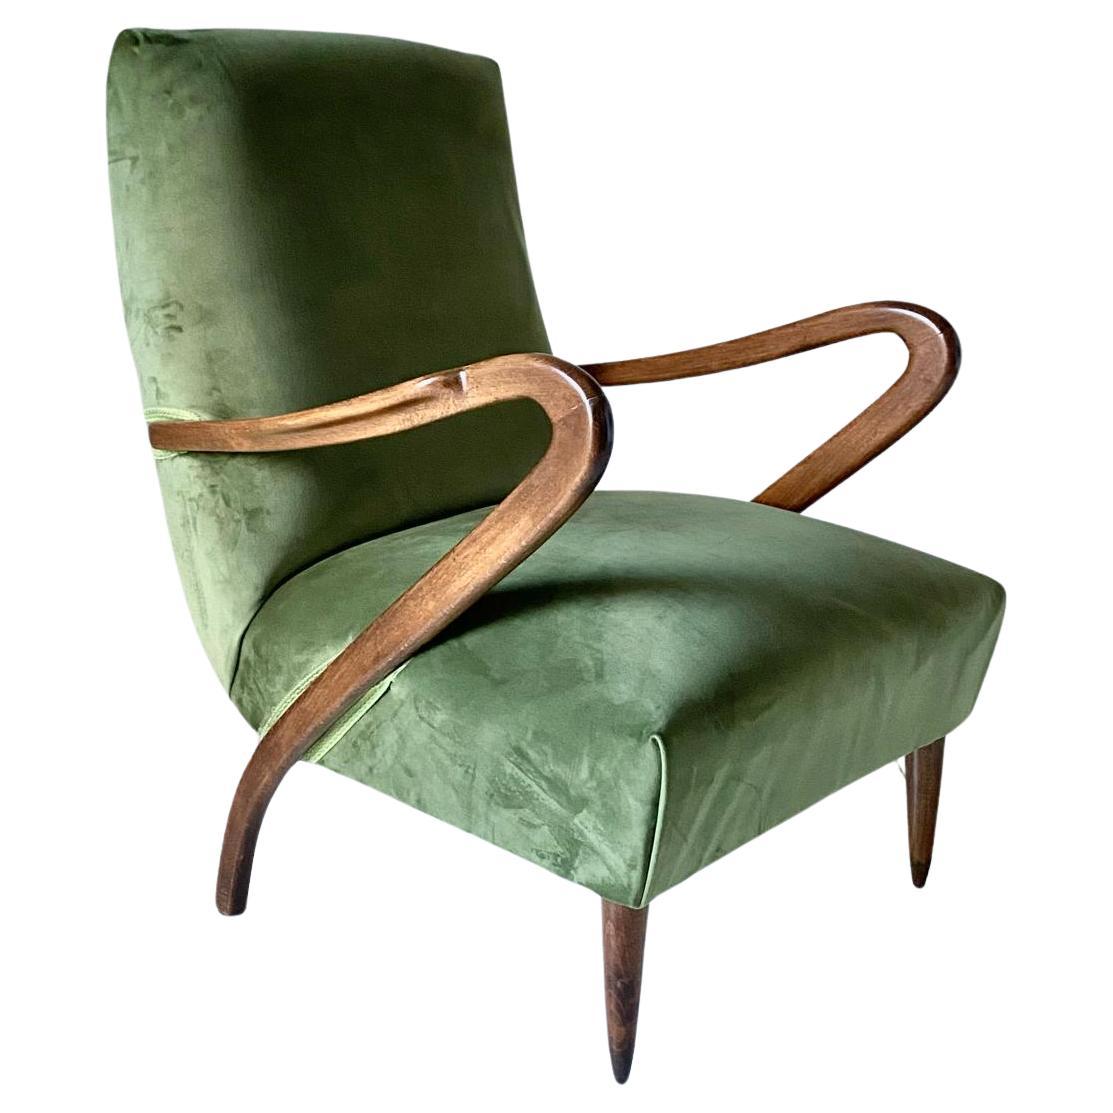 Midcentury modern Green Velvet Armchair, Guglielmo Ulrich, Italy 1950 's